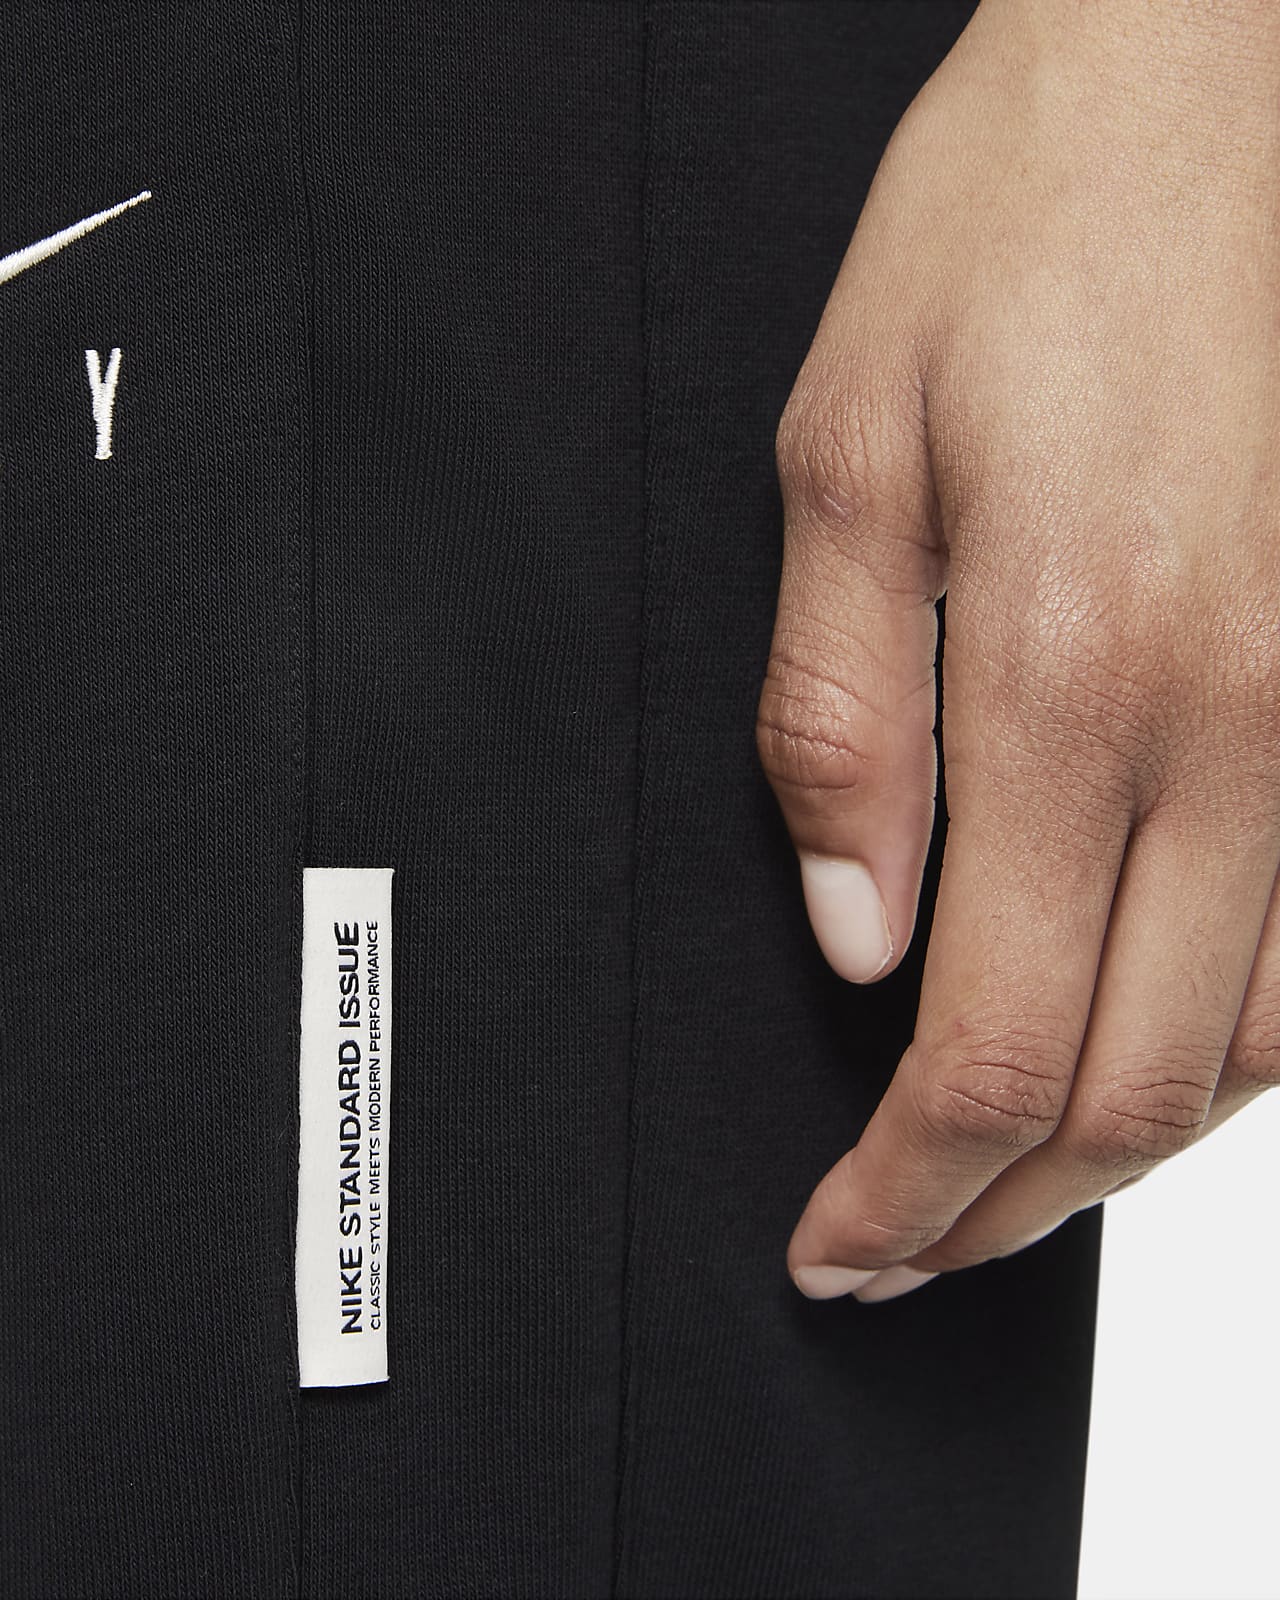 Nike Men's Standard Issue Pants, Large, Black